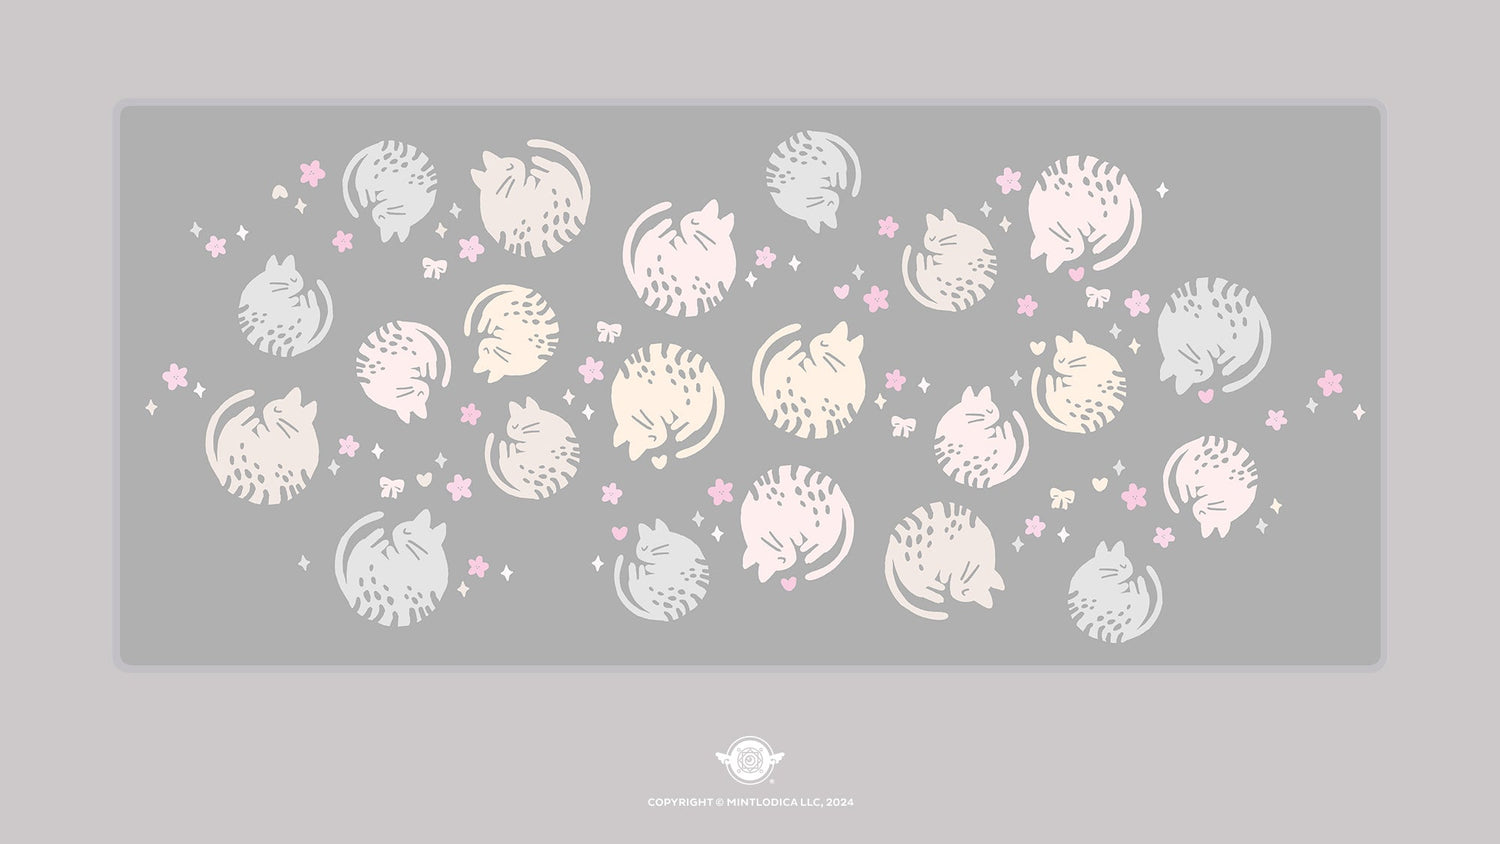 Sleeping Kitties 'Grey Tabby' Deskmats | Deskmats by Mintlodica | DM-SK-MINI-GREY Group Buy